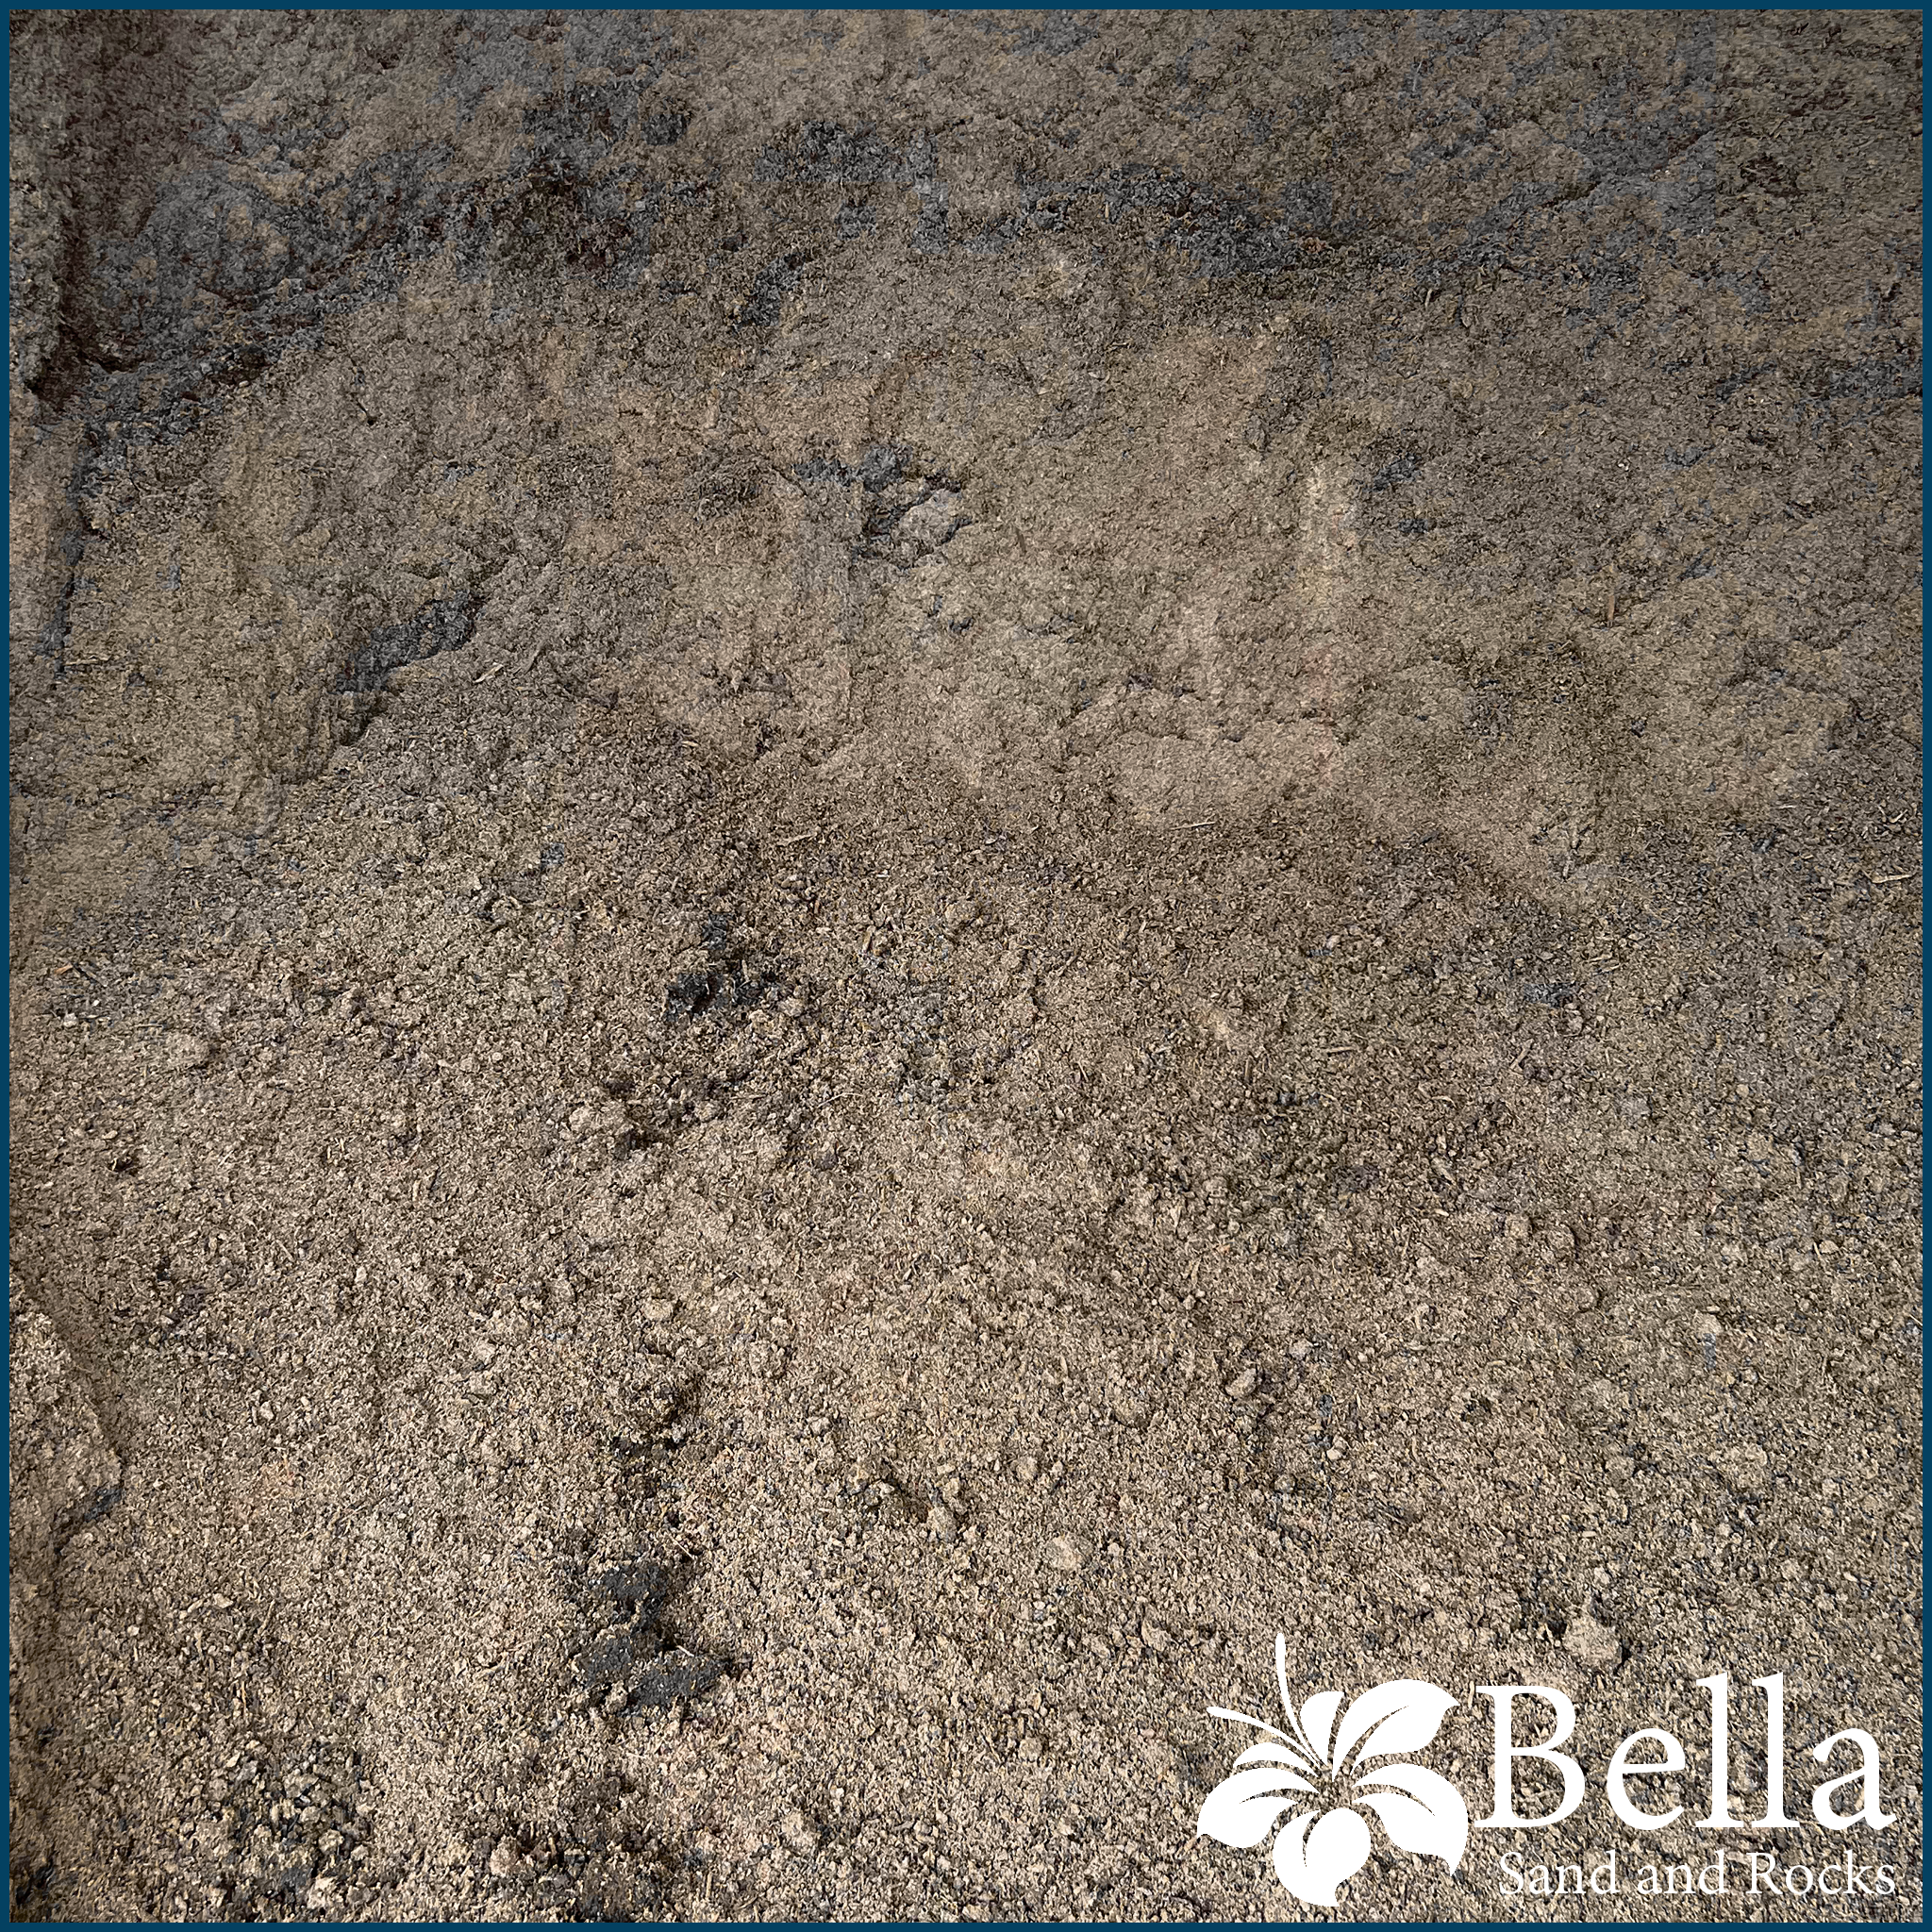 Topsoil - Bella Sand and Rocks of Tampa Florida